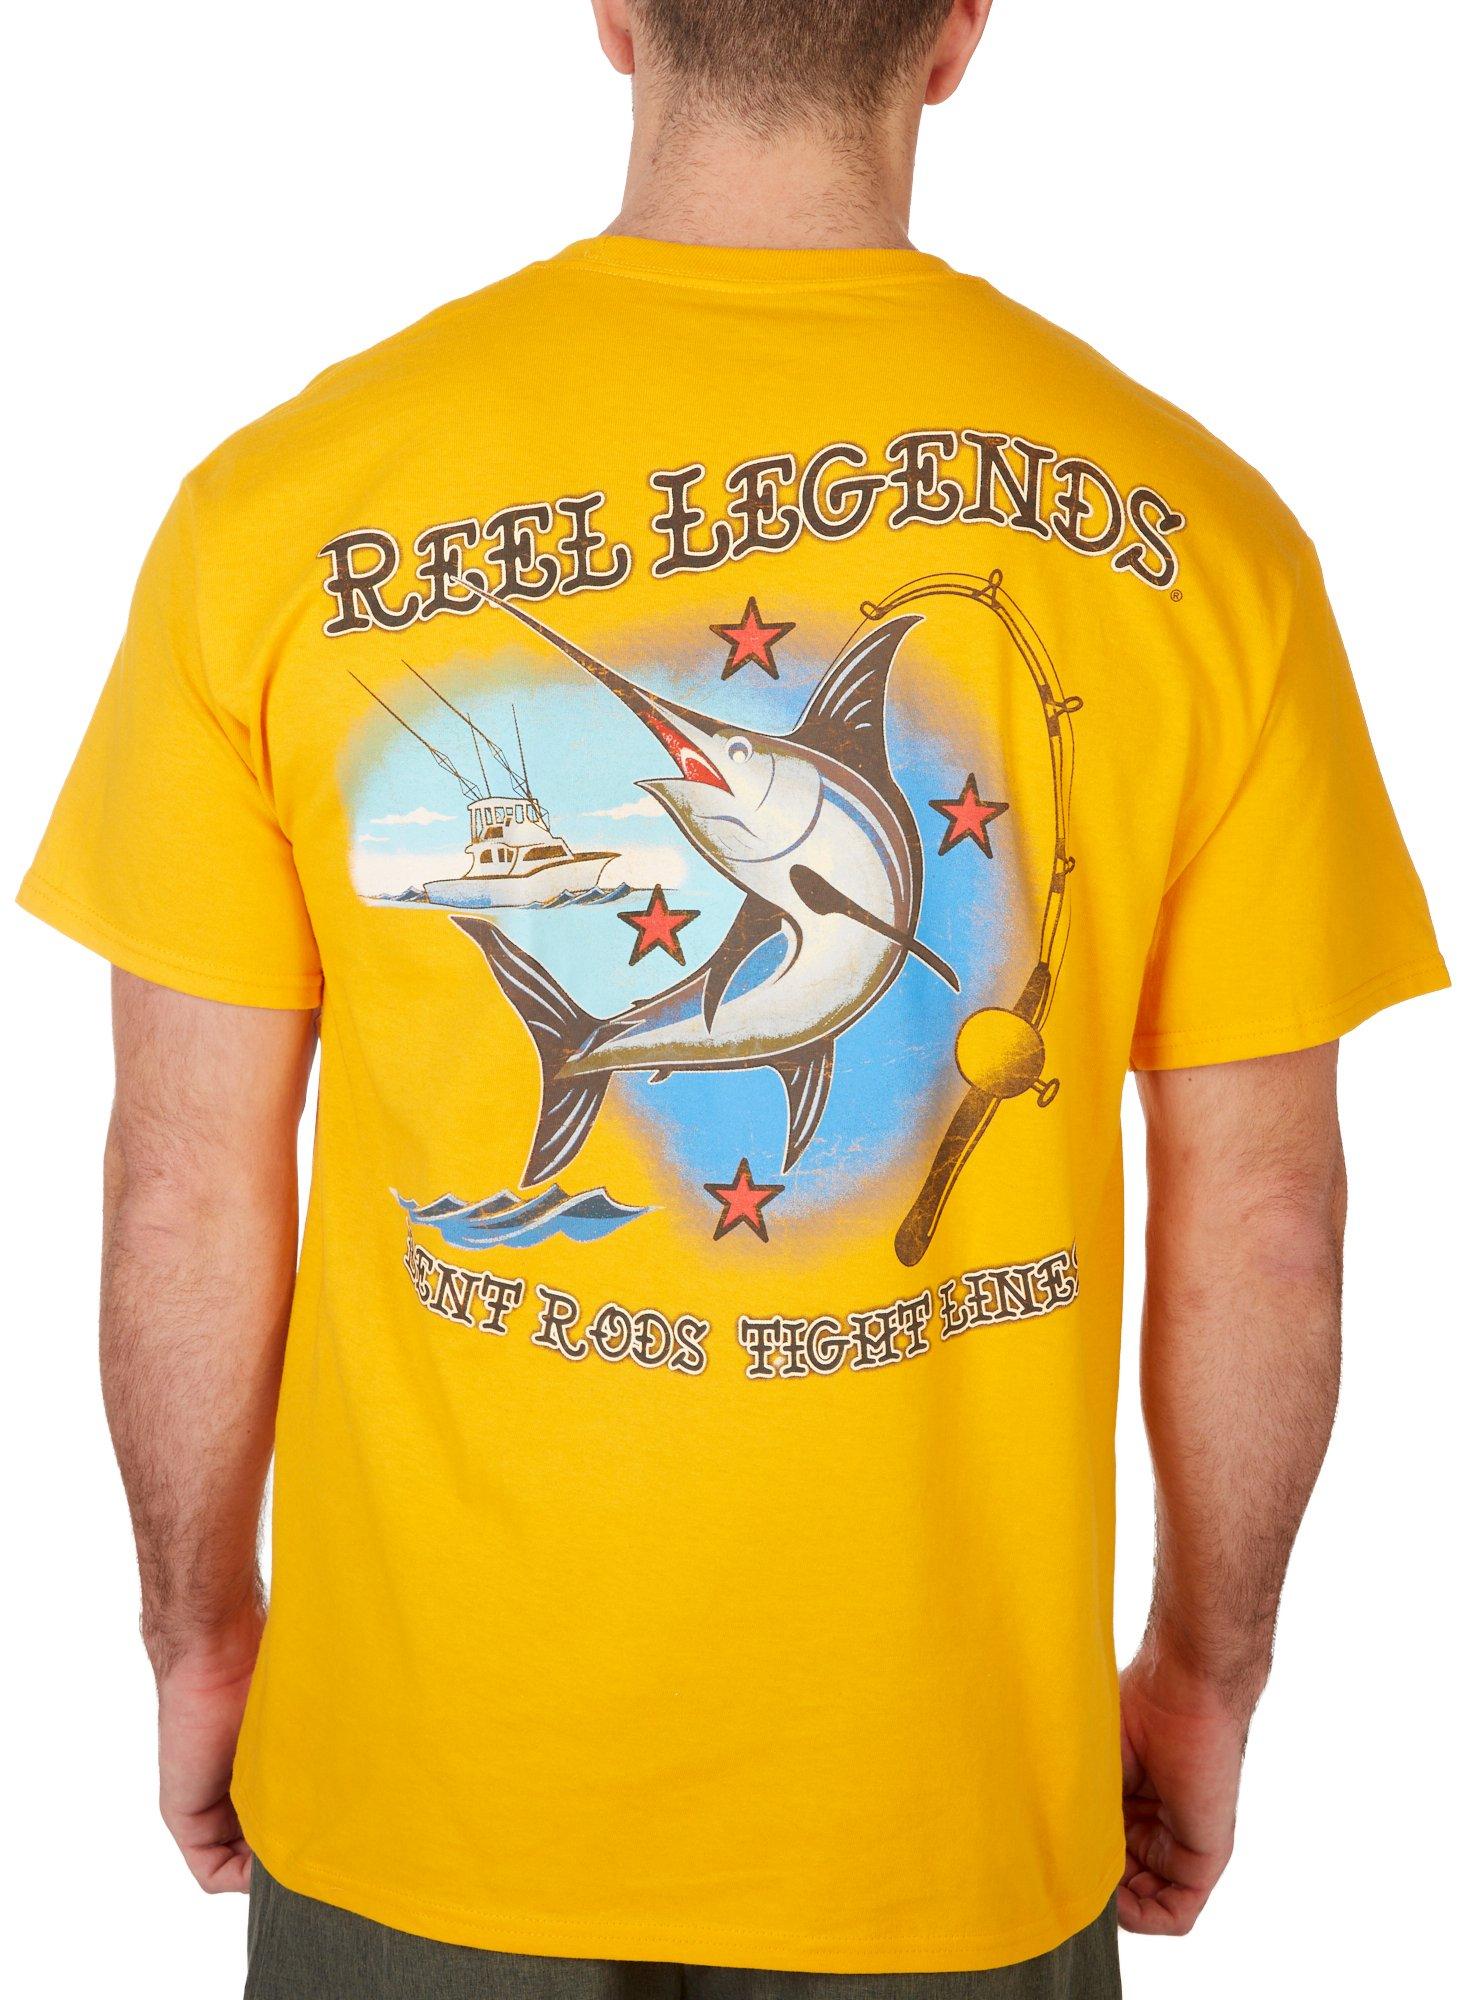 Reel Legends Mens Bent Rods Tight Lines Short Sleeve T-Shirt